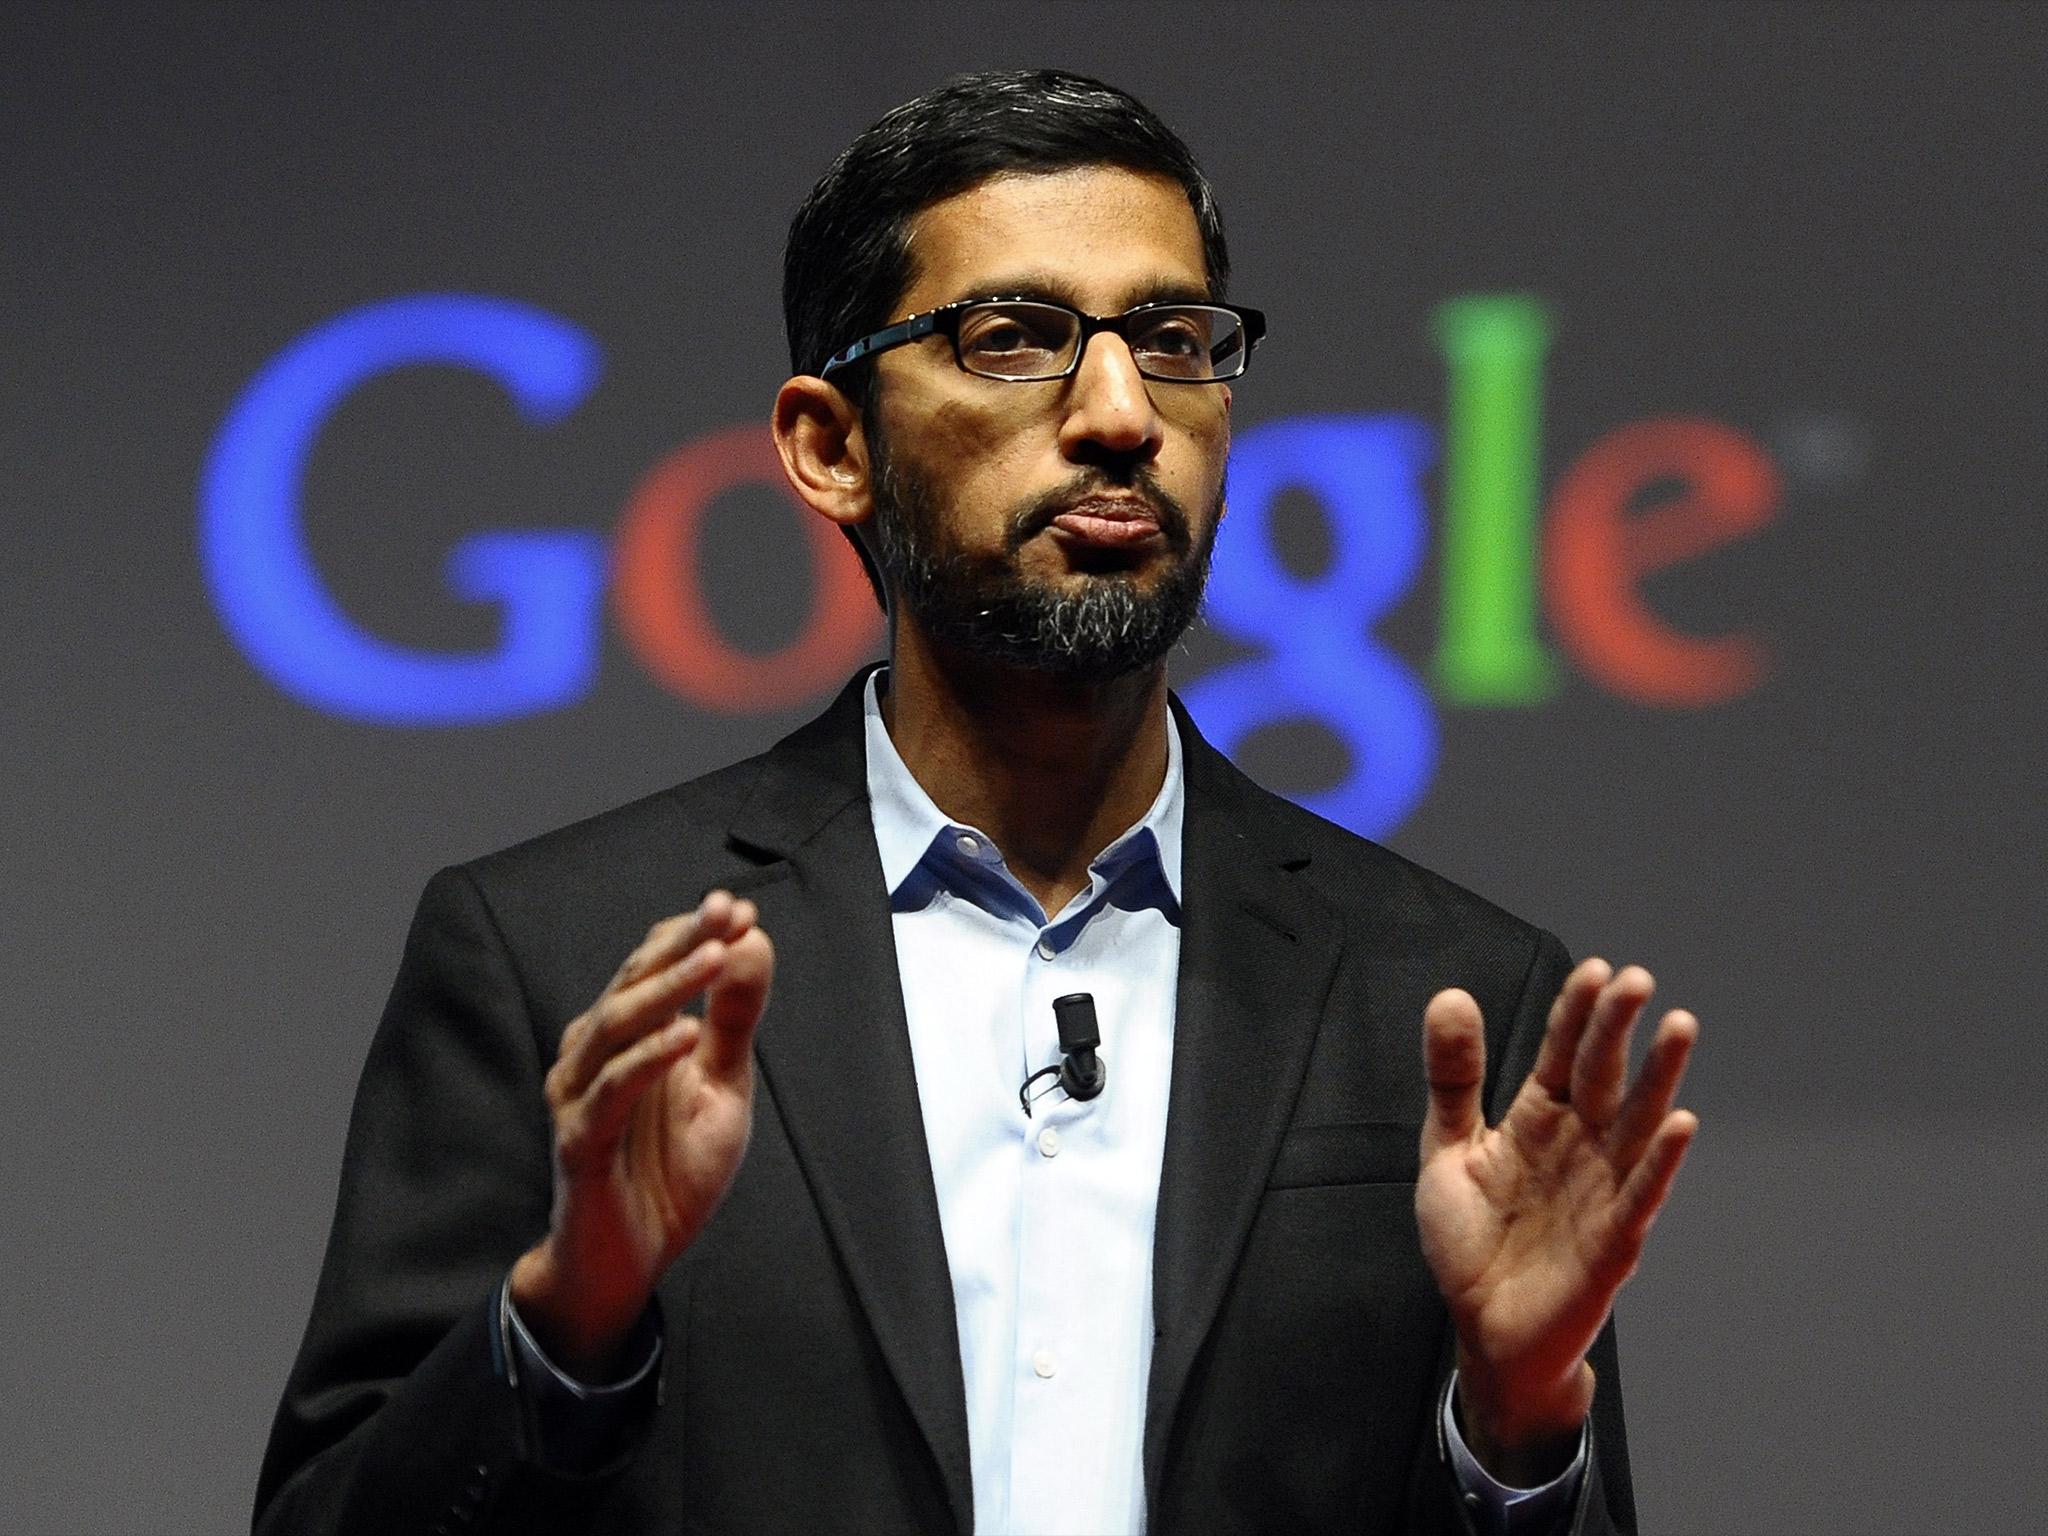 Google's CEO Sundar Pichai has expressed his concerns over Donald Trump's refugee ban